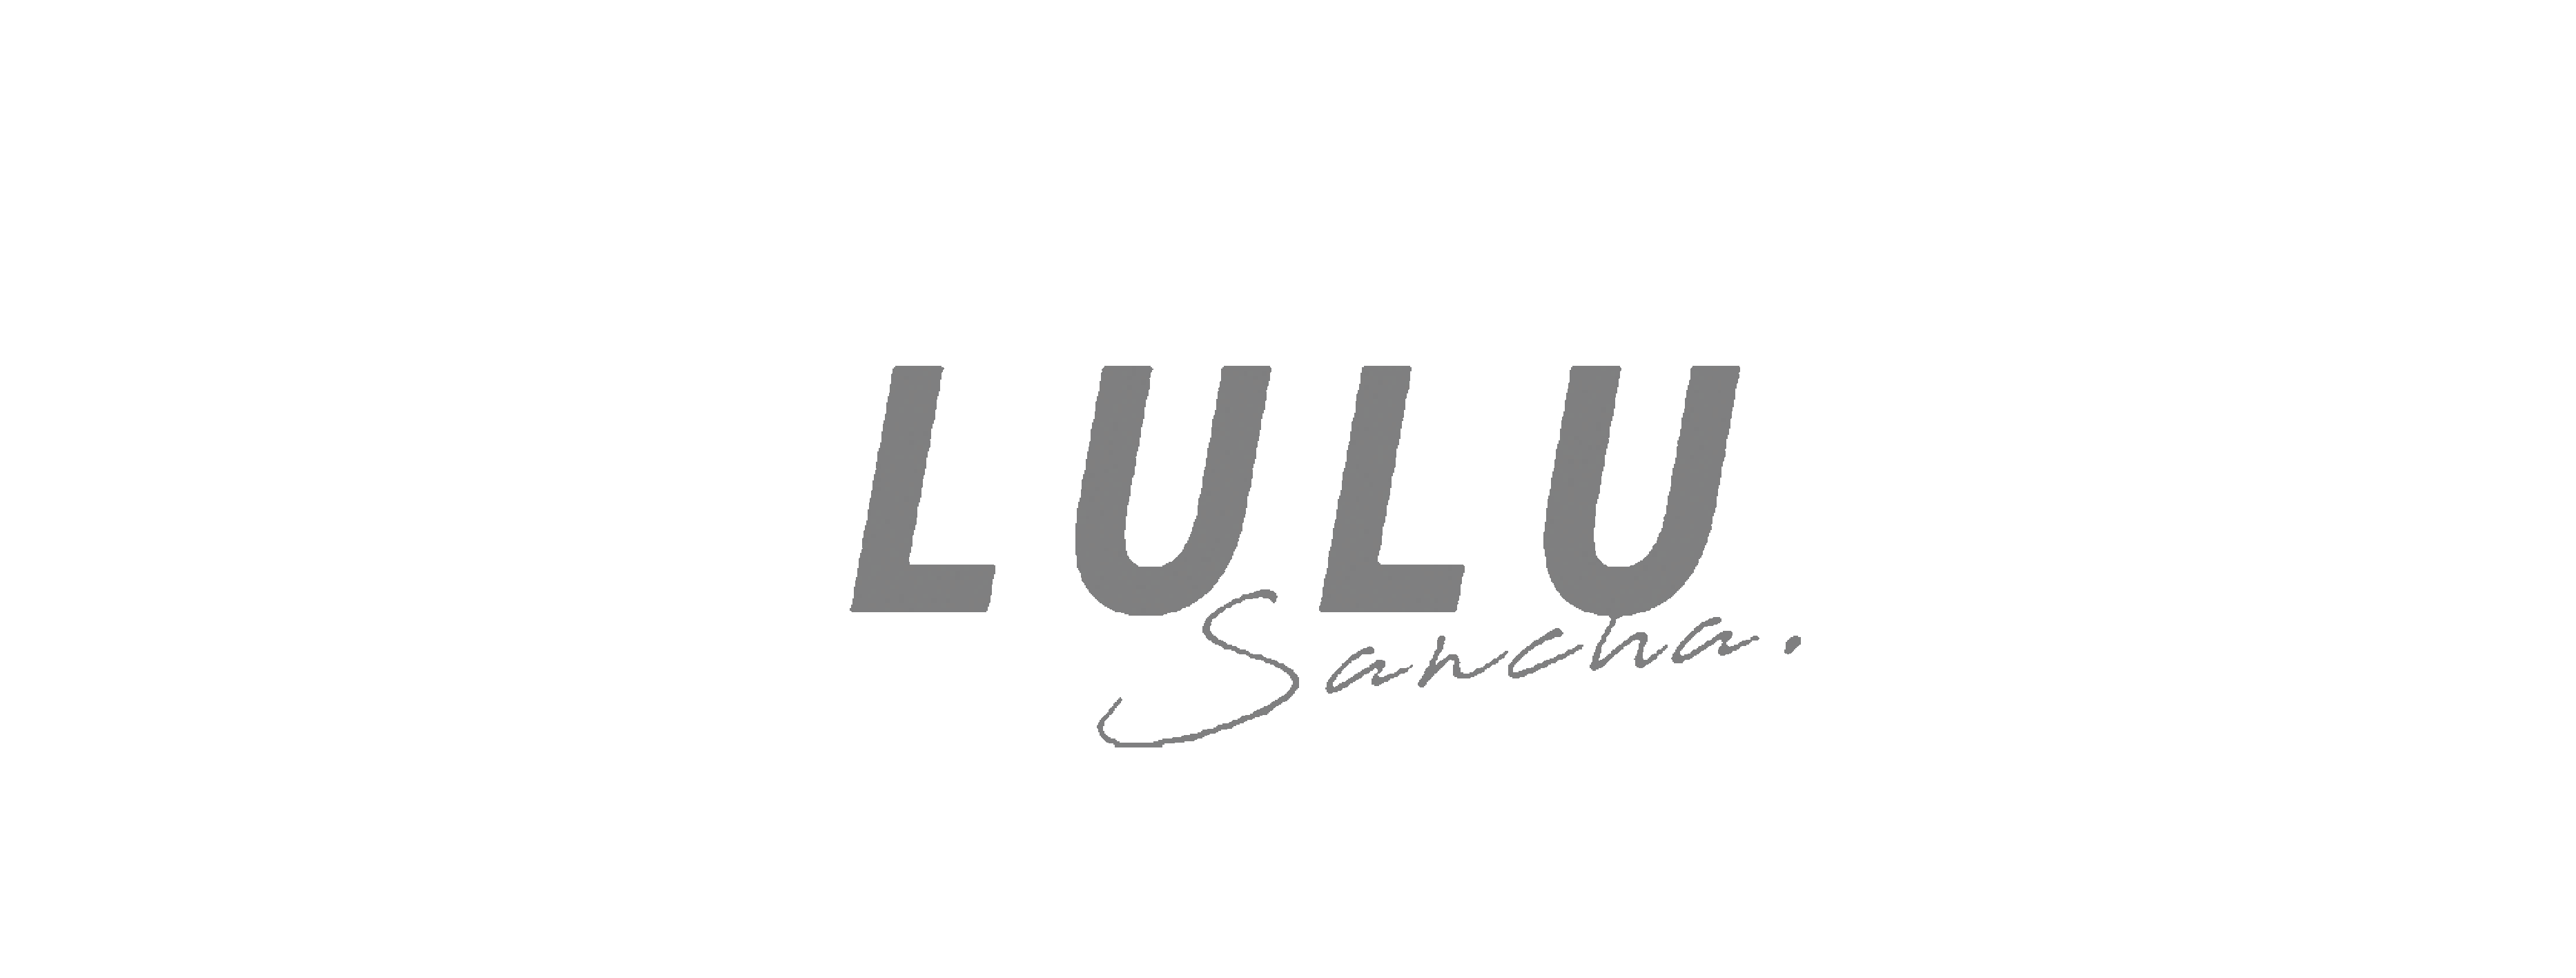 Lululogo2